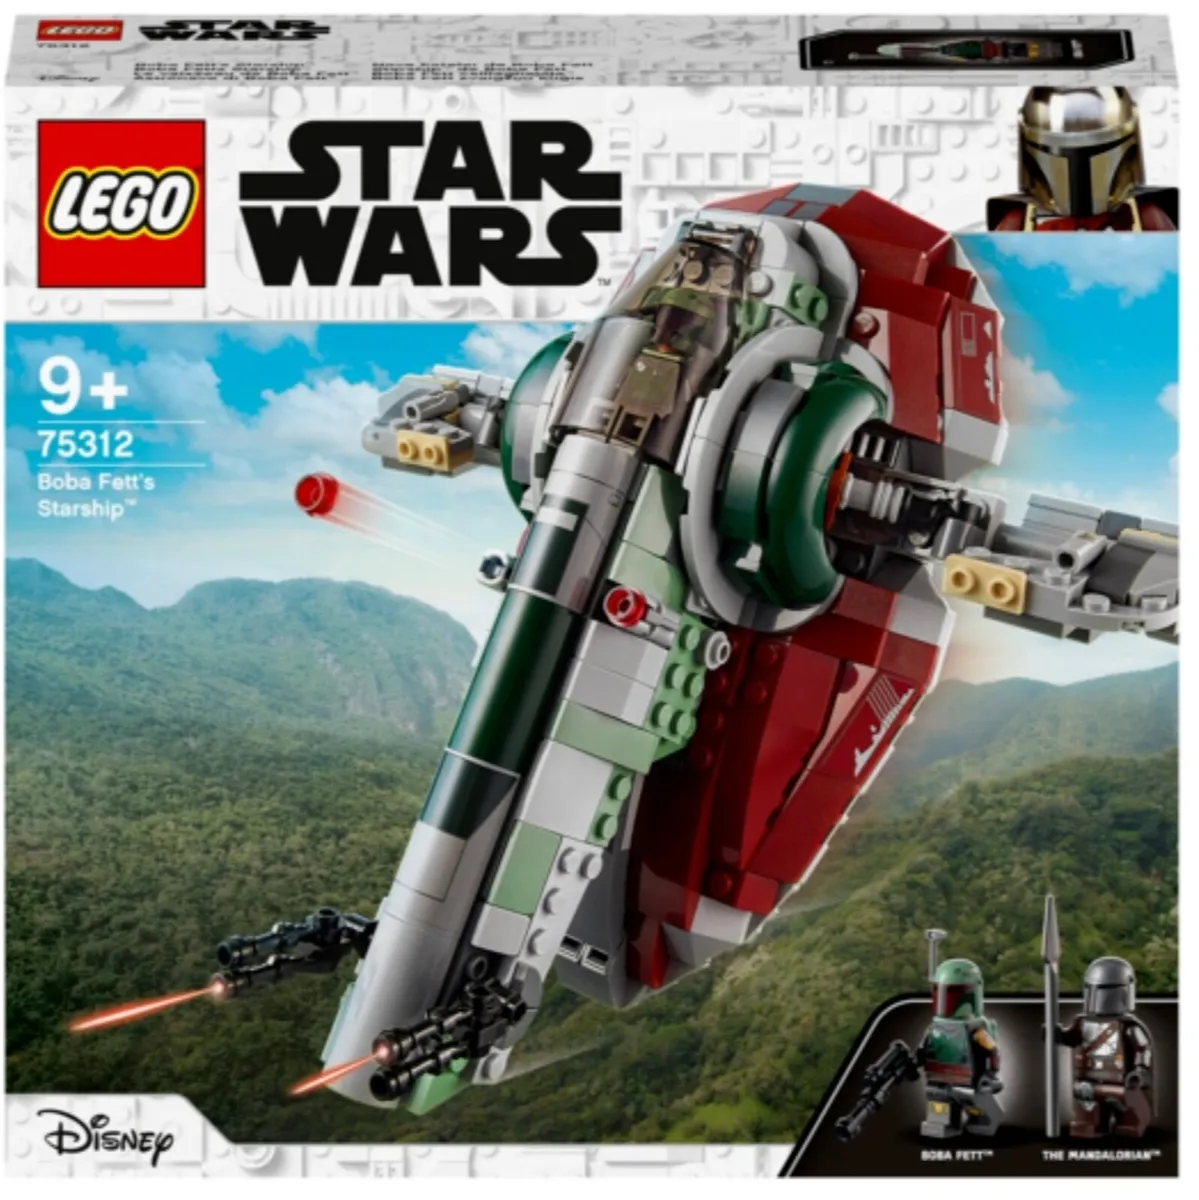 Lego Star Wars 75312 Boba Fett's Ship - Image 1